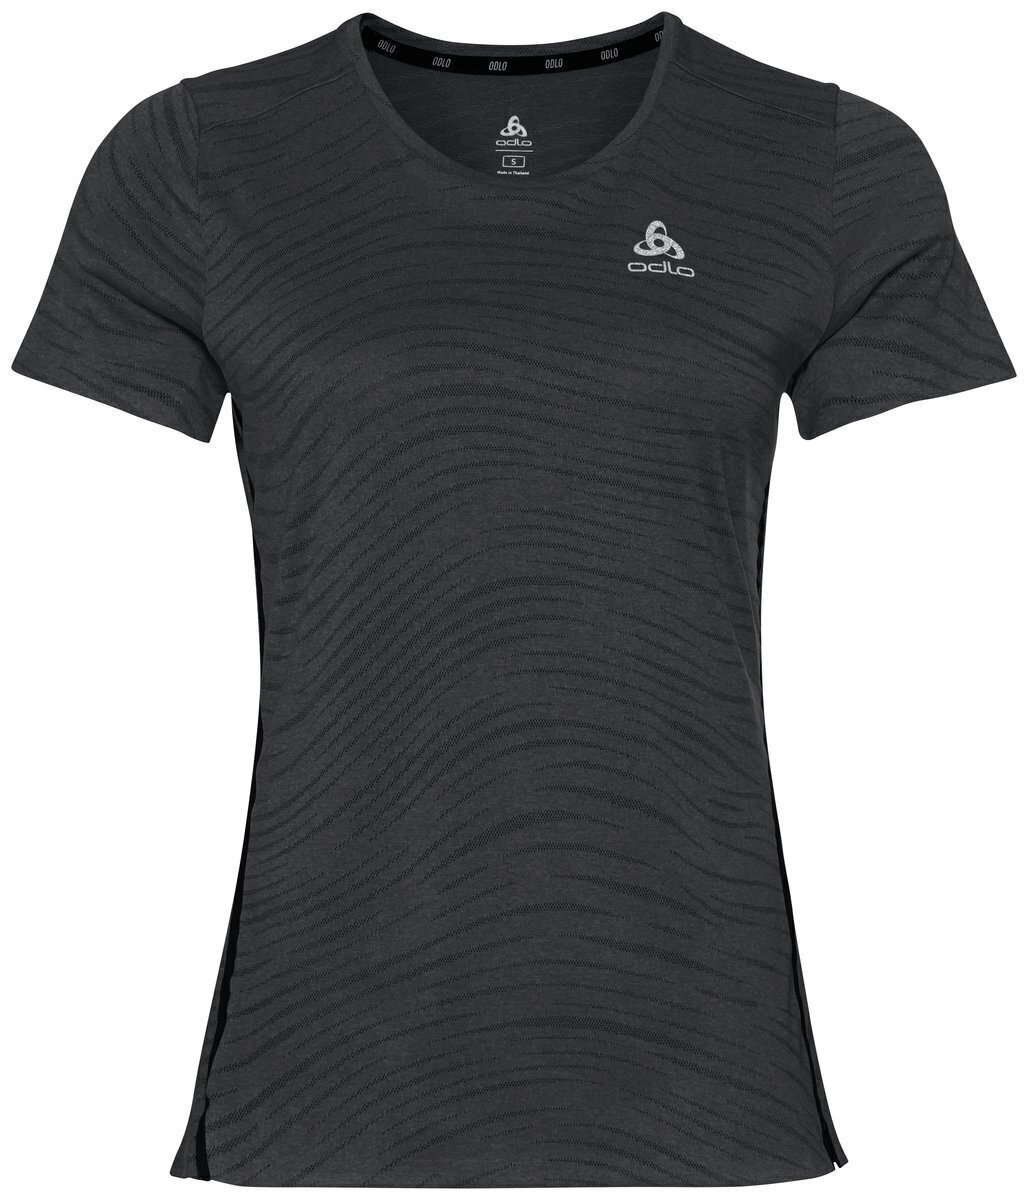 Running t-shirt with short sleeves
 Odlo Zeroweight Engineered Chill-Tec T-Shirt Black Melange M Running t-shirt with short sleeves